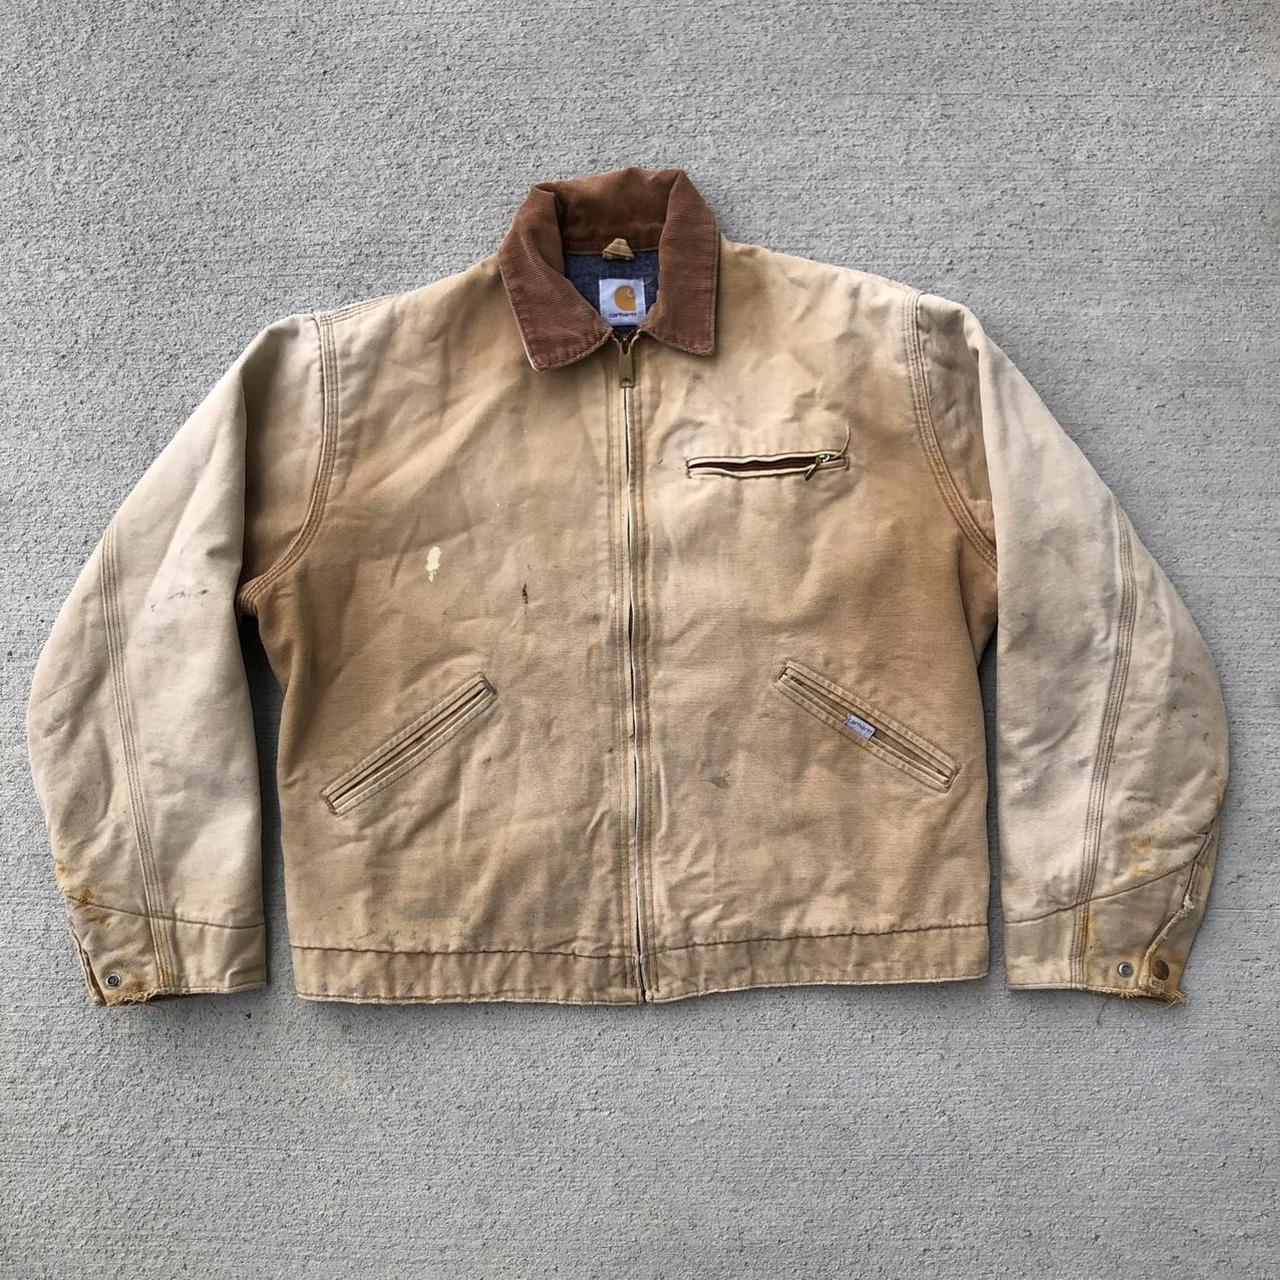 Product Image 1 - Vintage Carhartt Detroit jacket, in